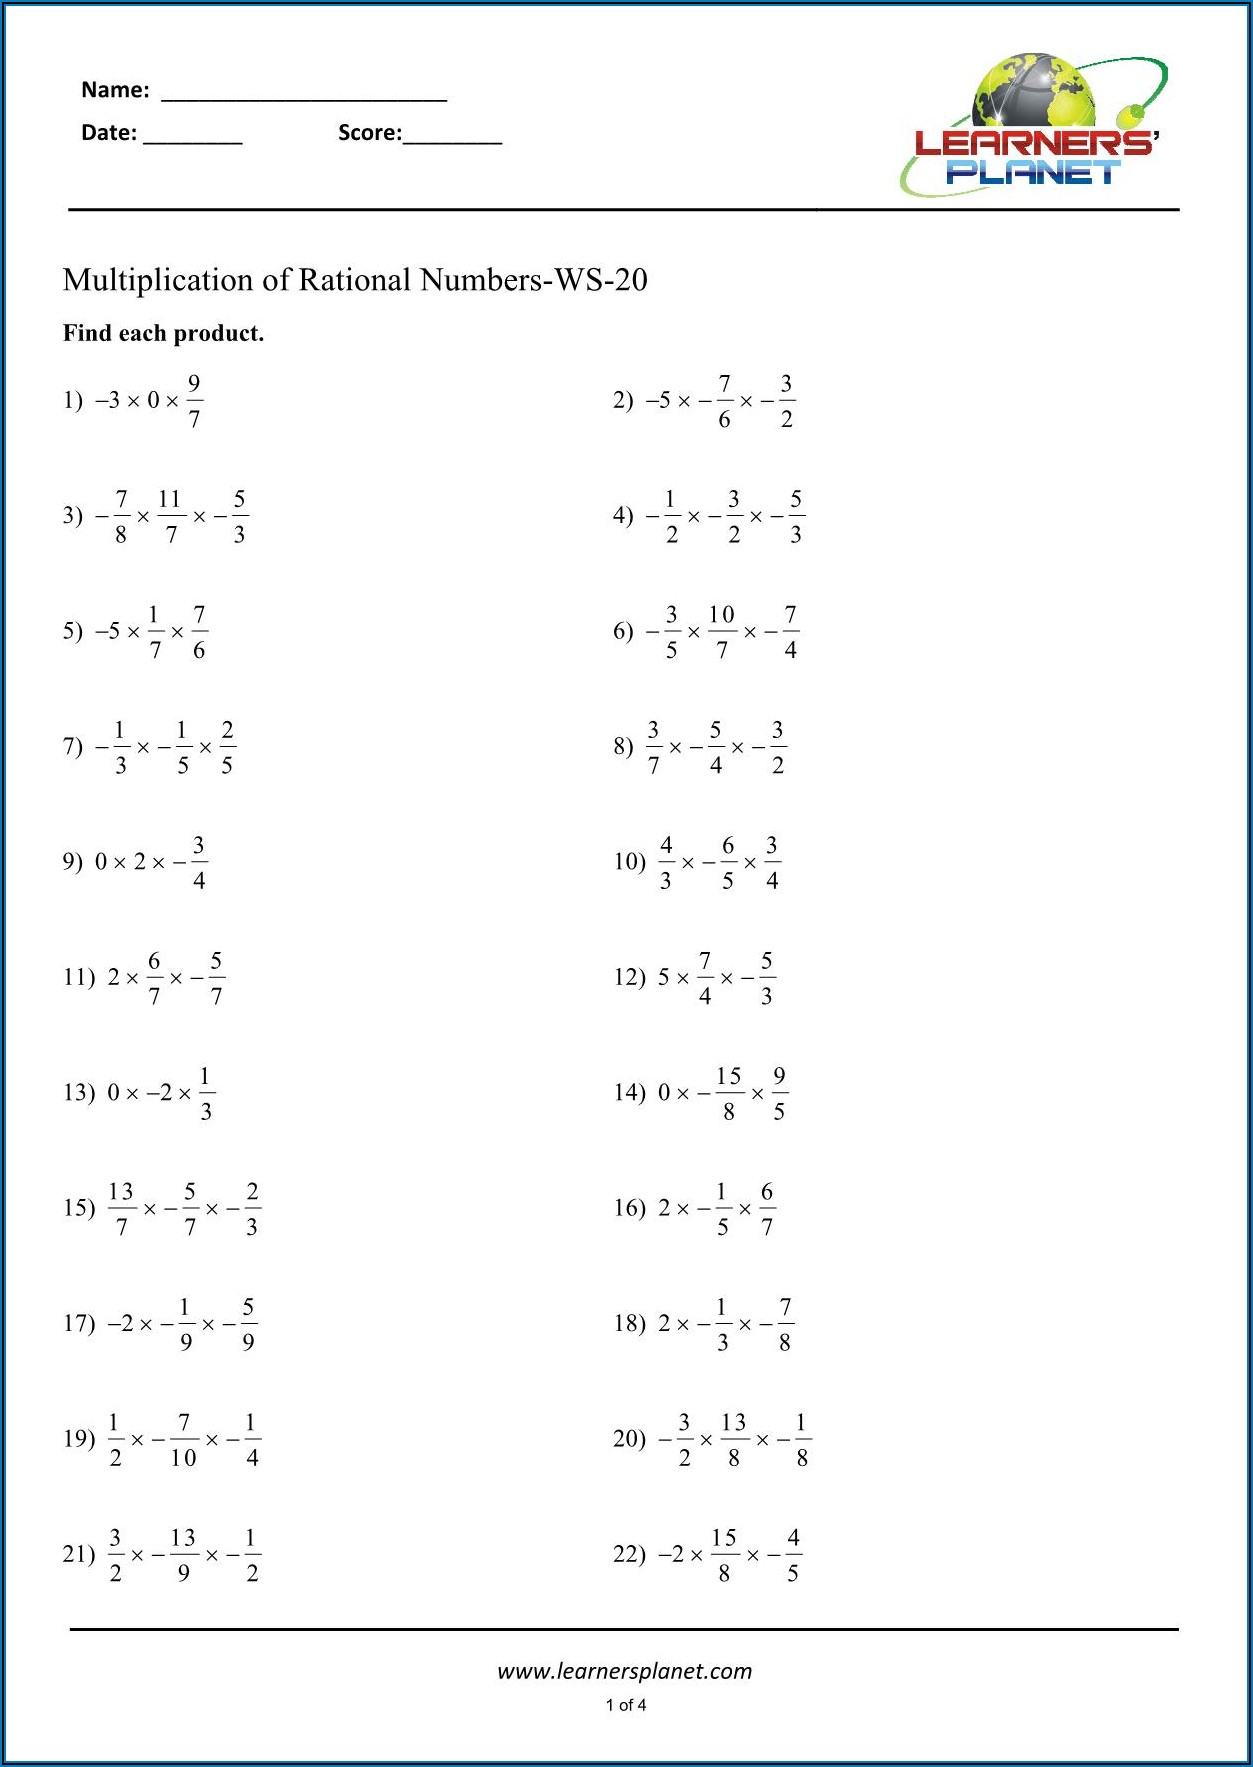 Rational Number Multiplication And Division Worksheet